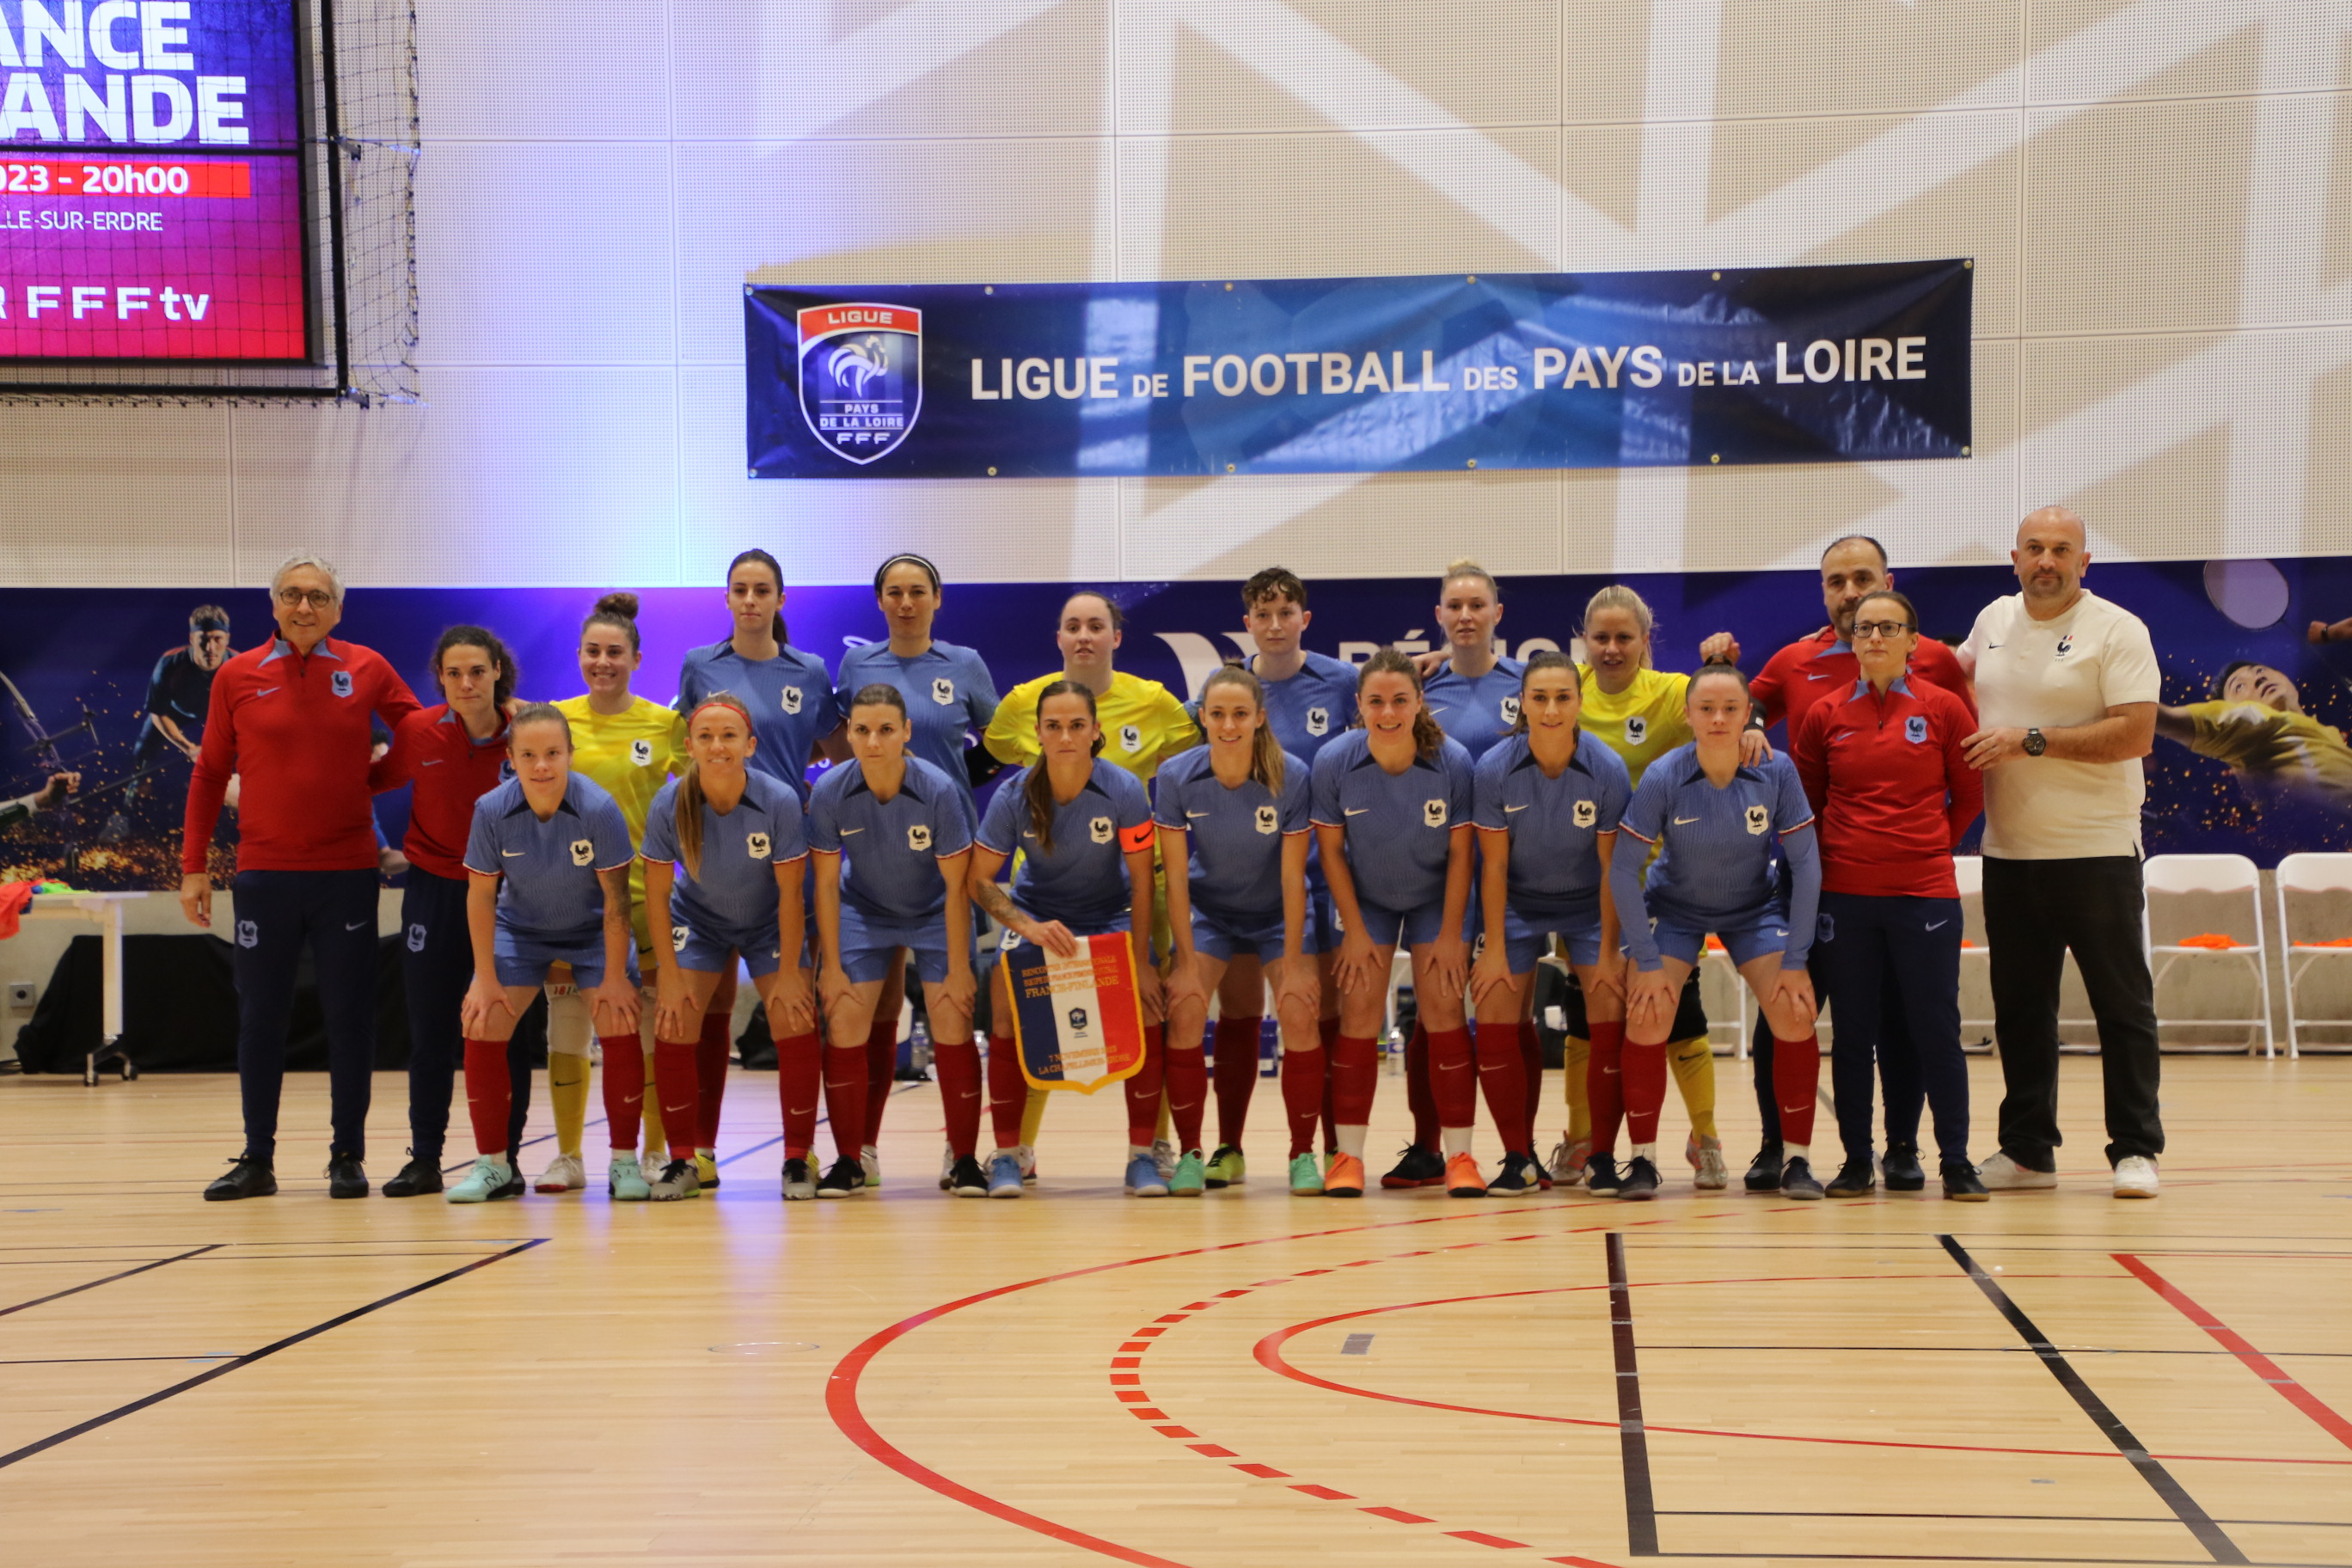 Futsal - Un premier match encourageant face à la FINLANDE (1-1)